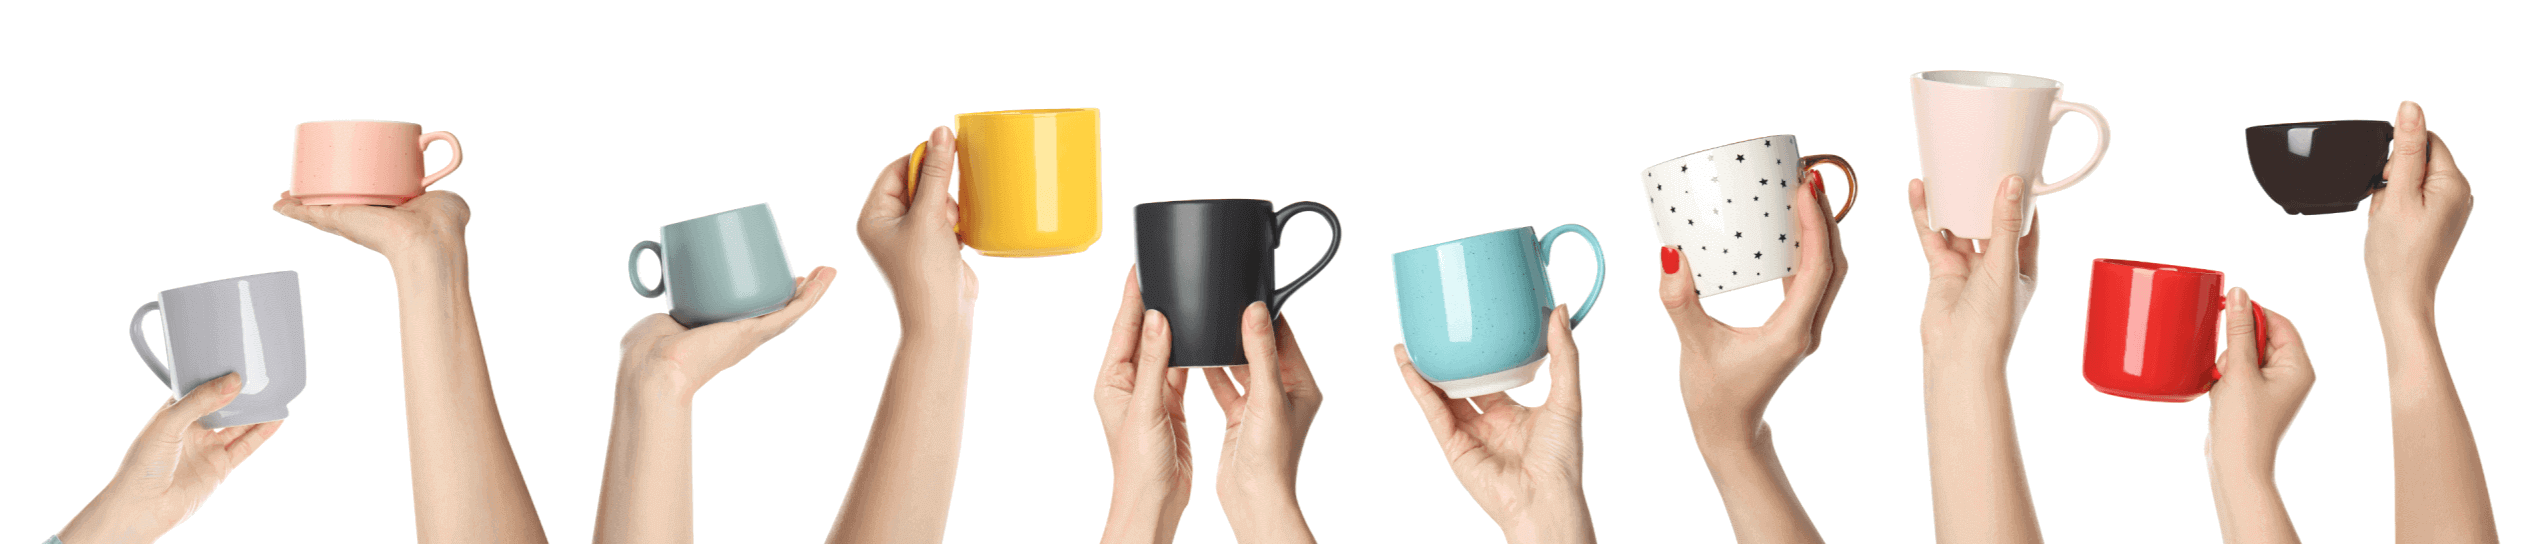 hands holding coffee mugs